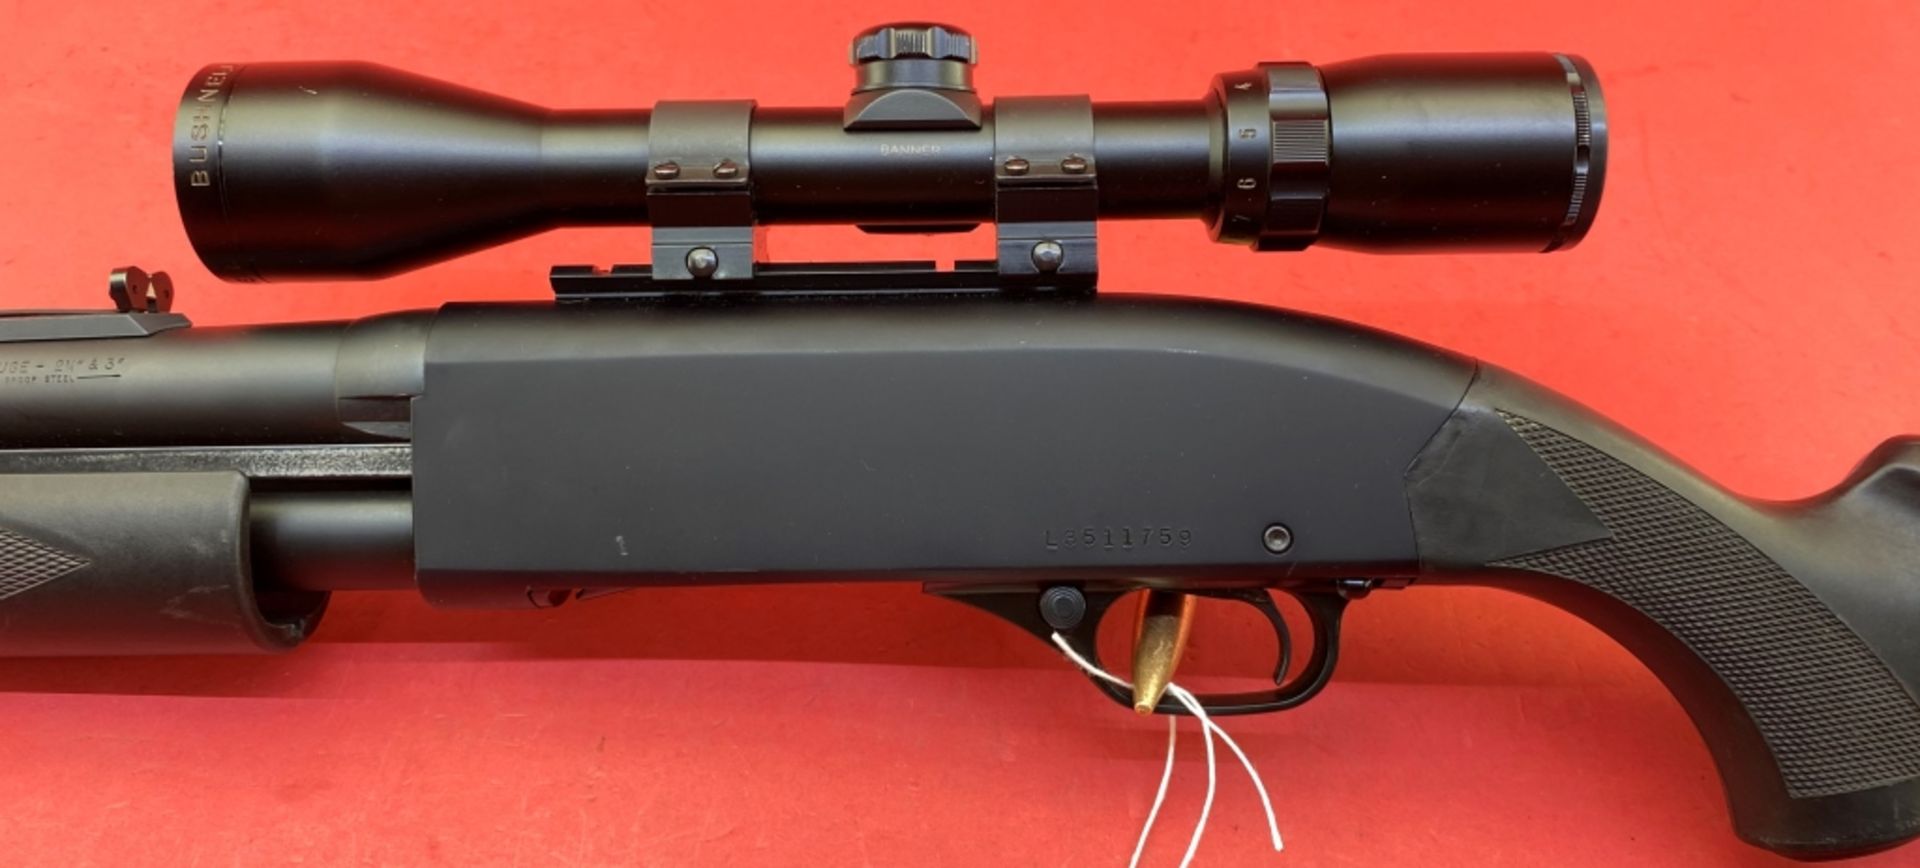 Winchester 1300 12 ga 3"" Shotgun - Image 6 of 7